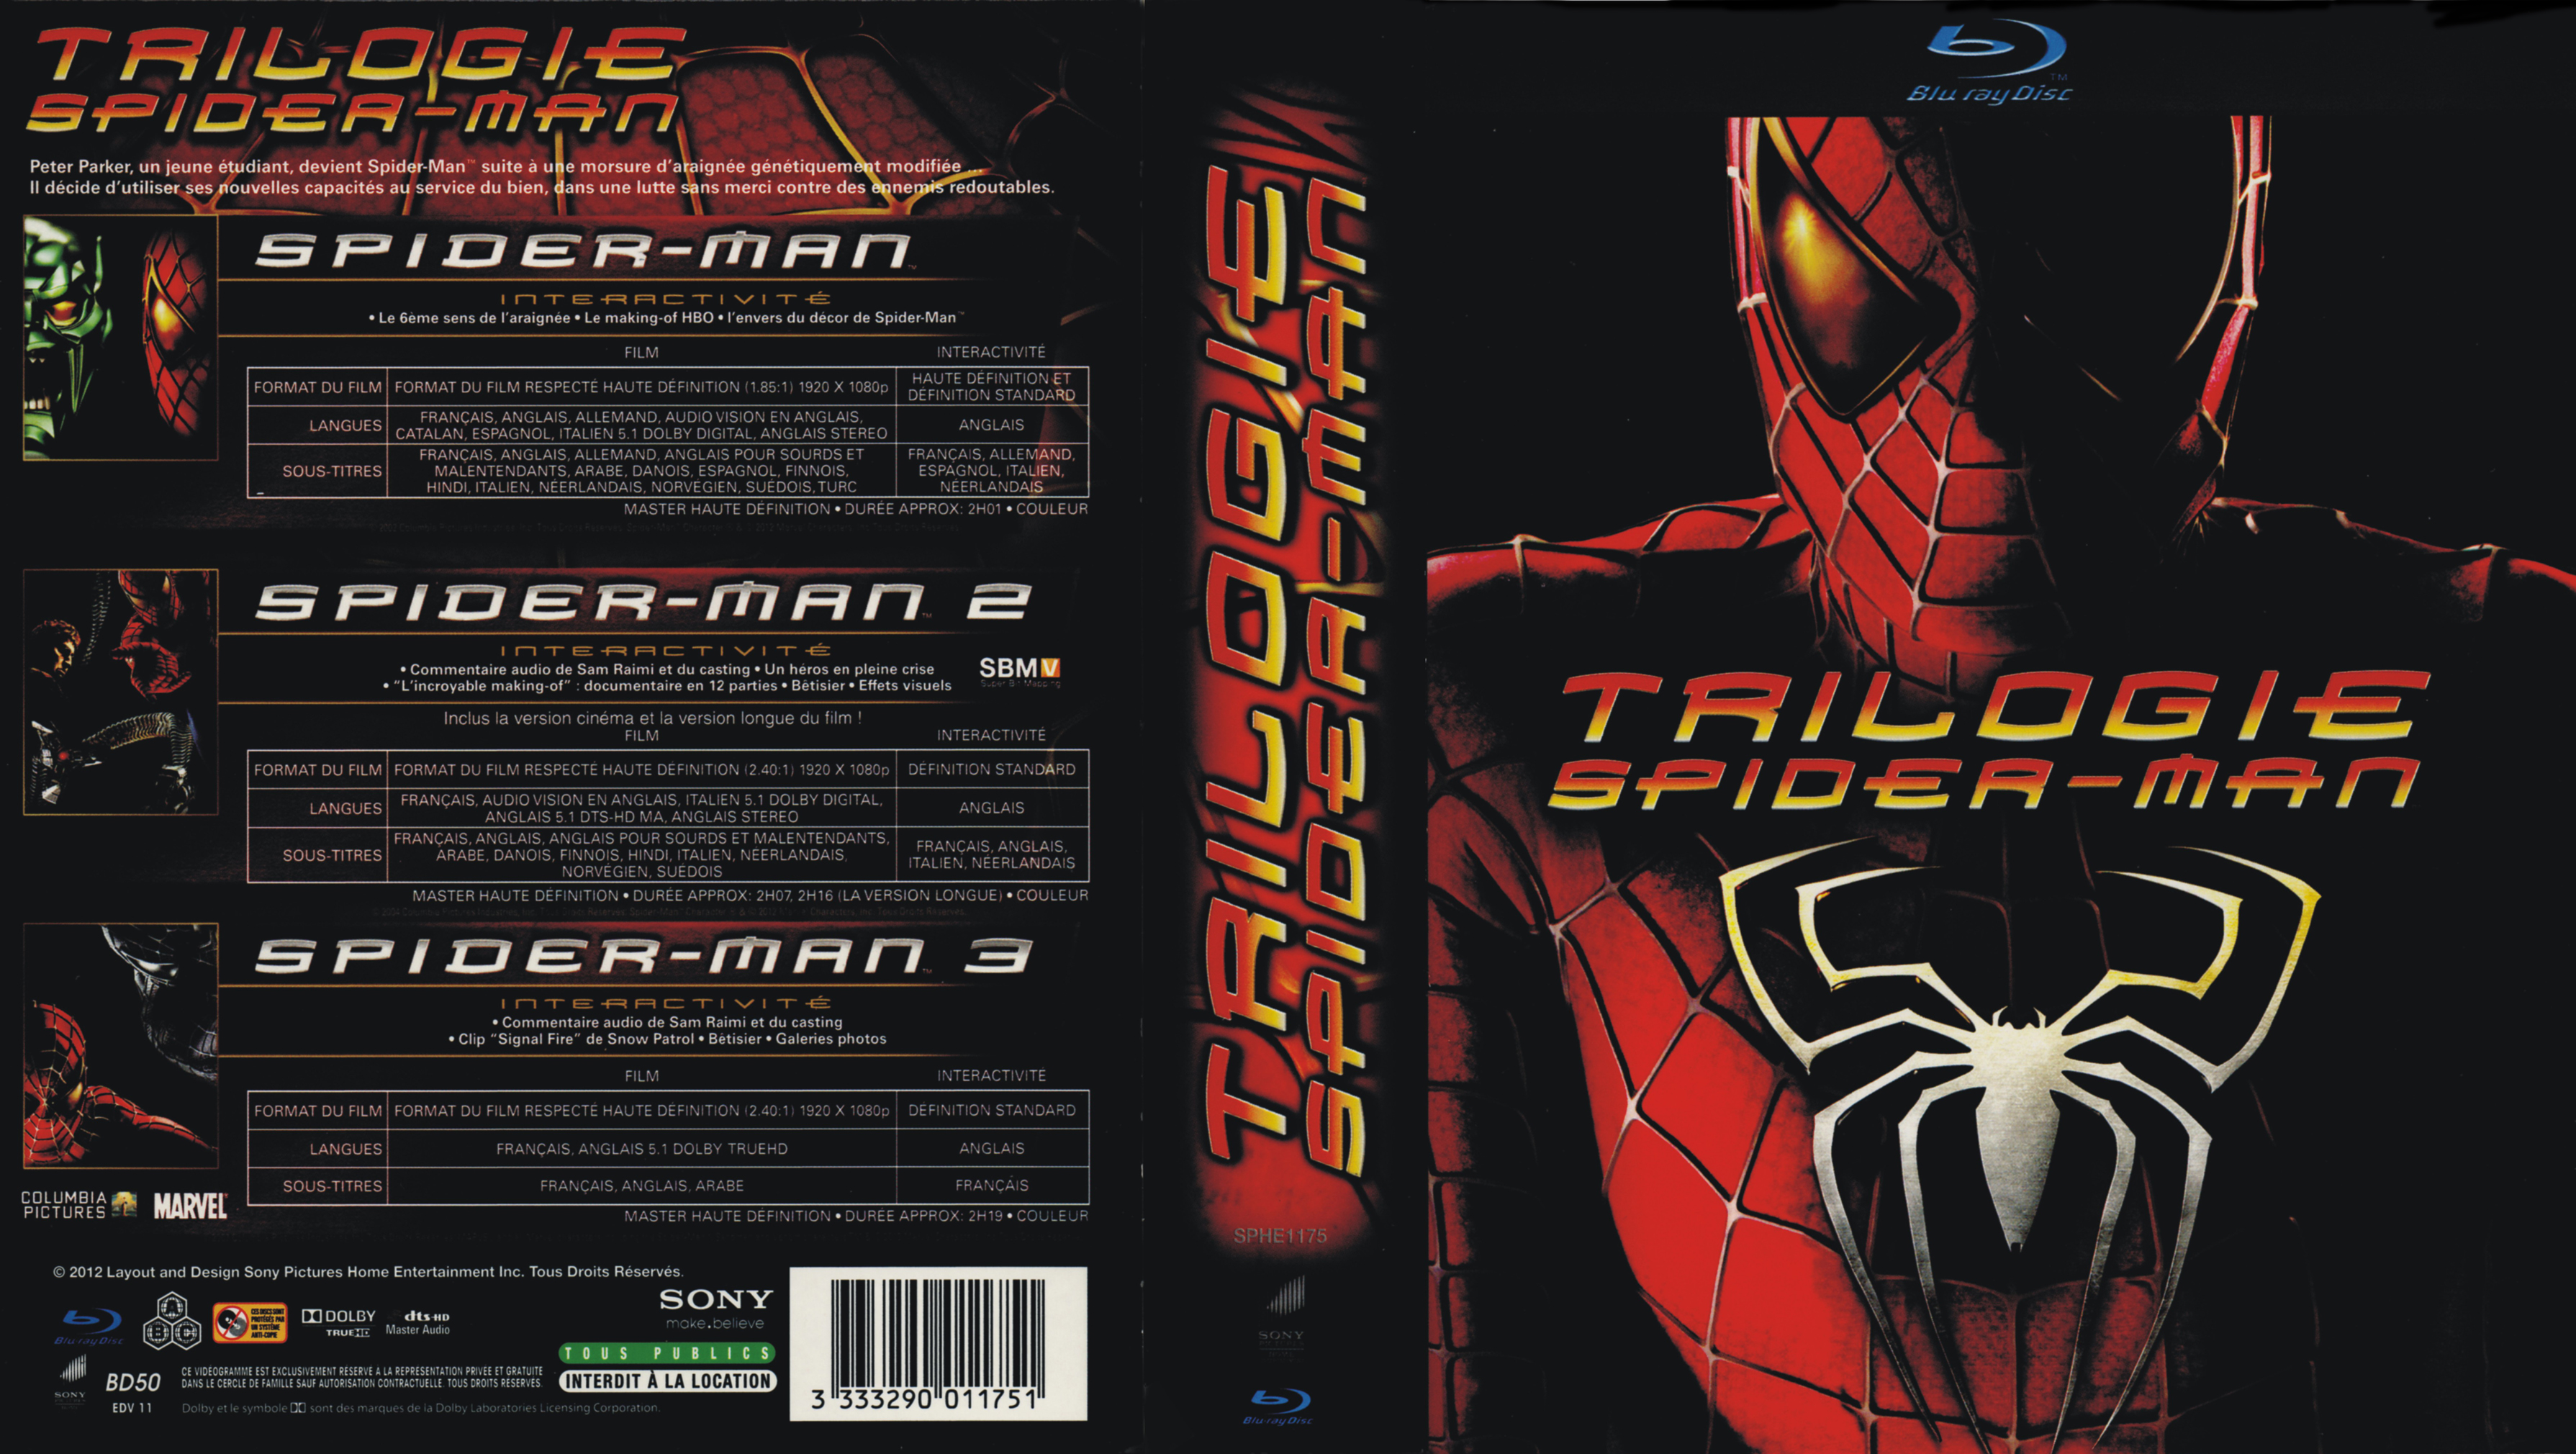 Jaquette DVD Spiderman Trilogie (BLU-RAY) v3